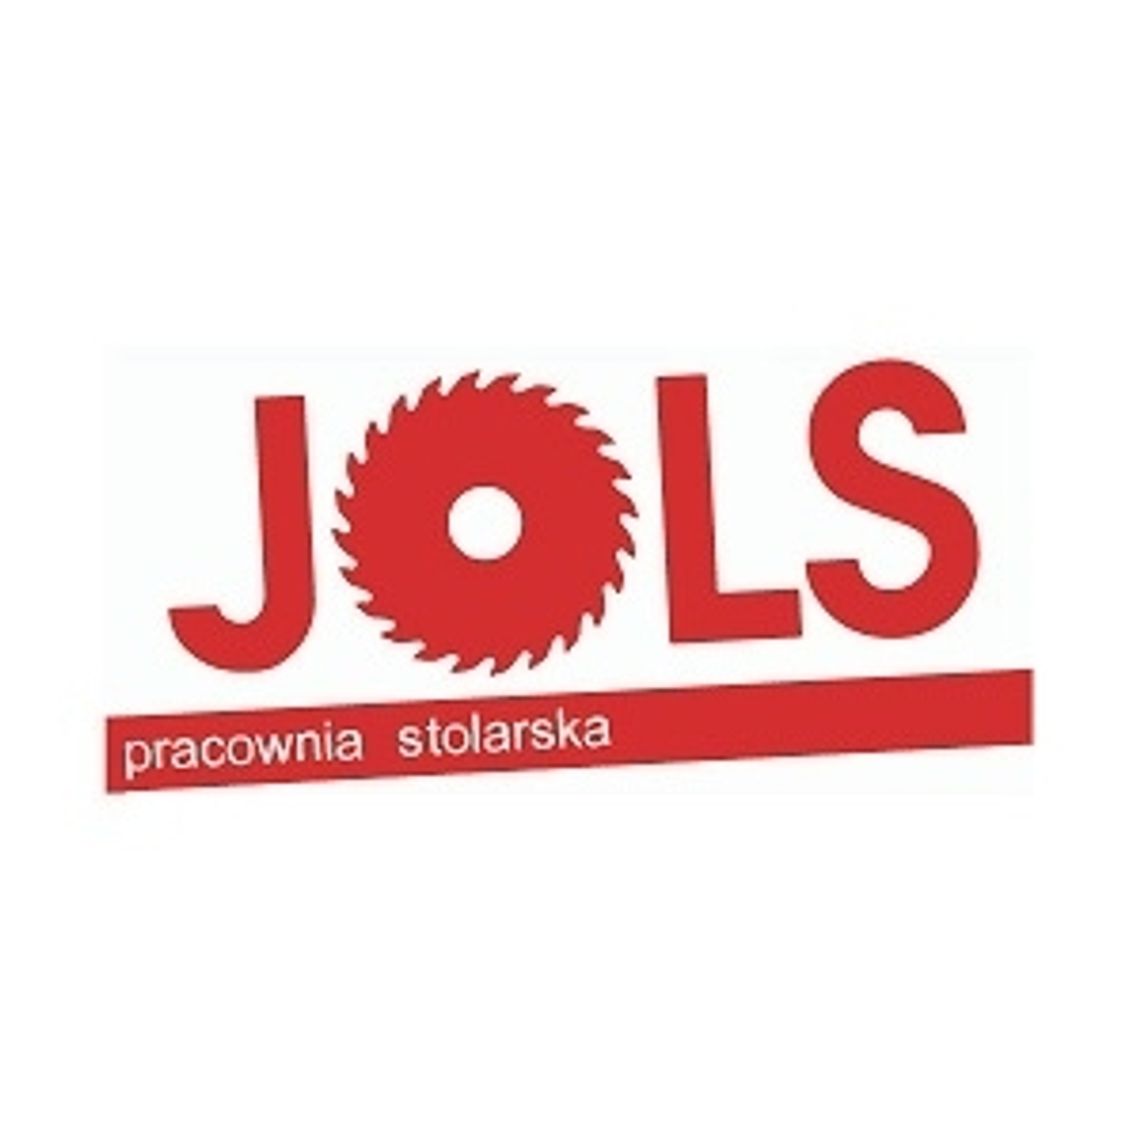 Pracownia stolarska - Jols